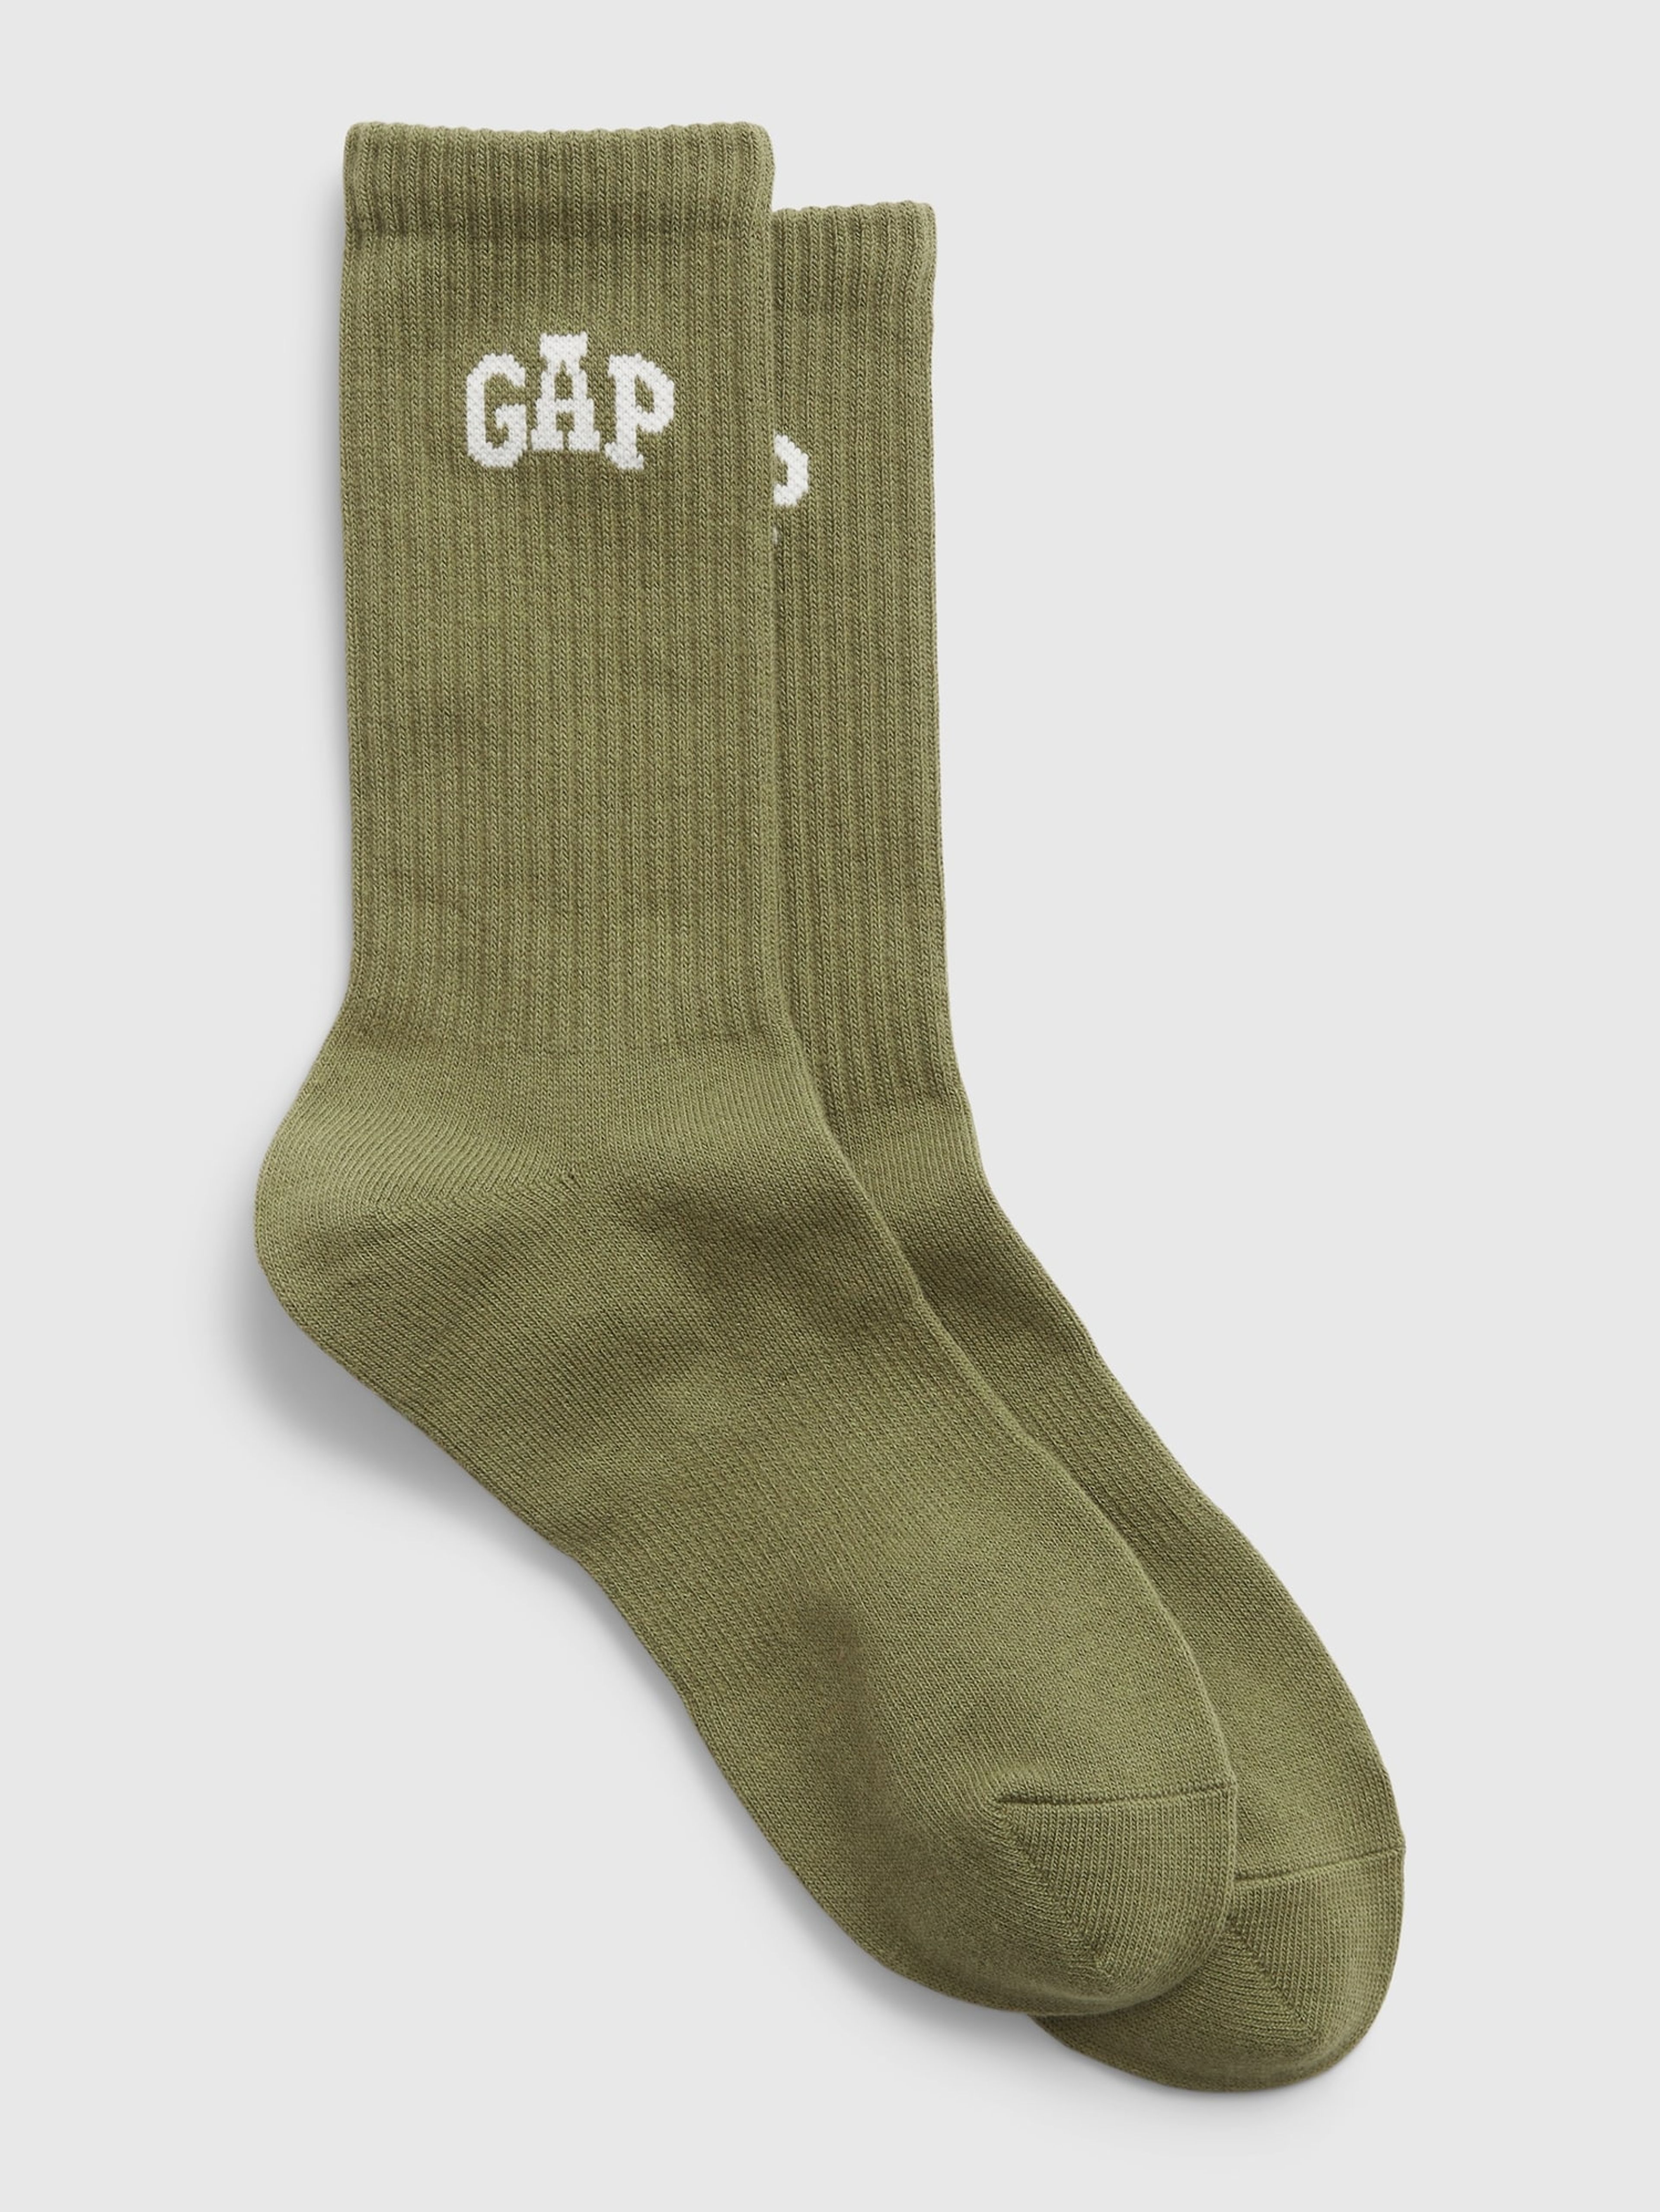 Socken mit GAP Logo